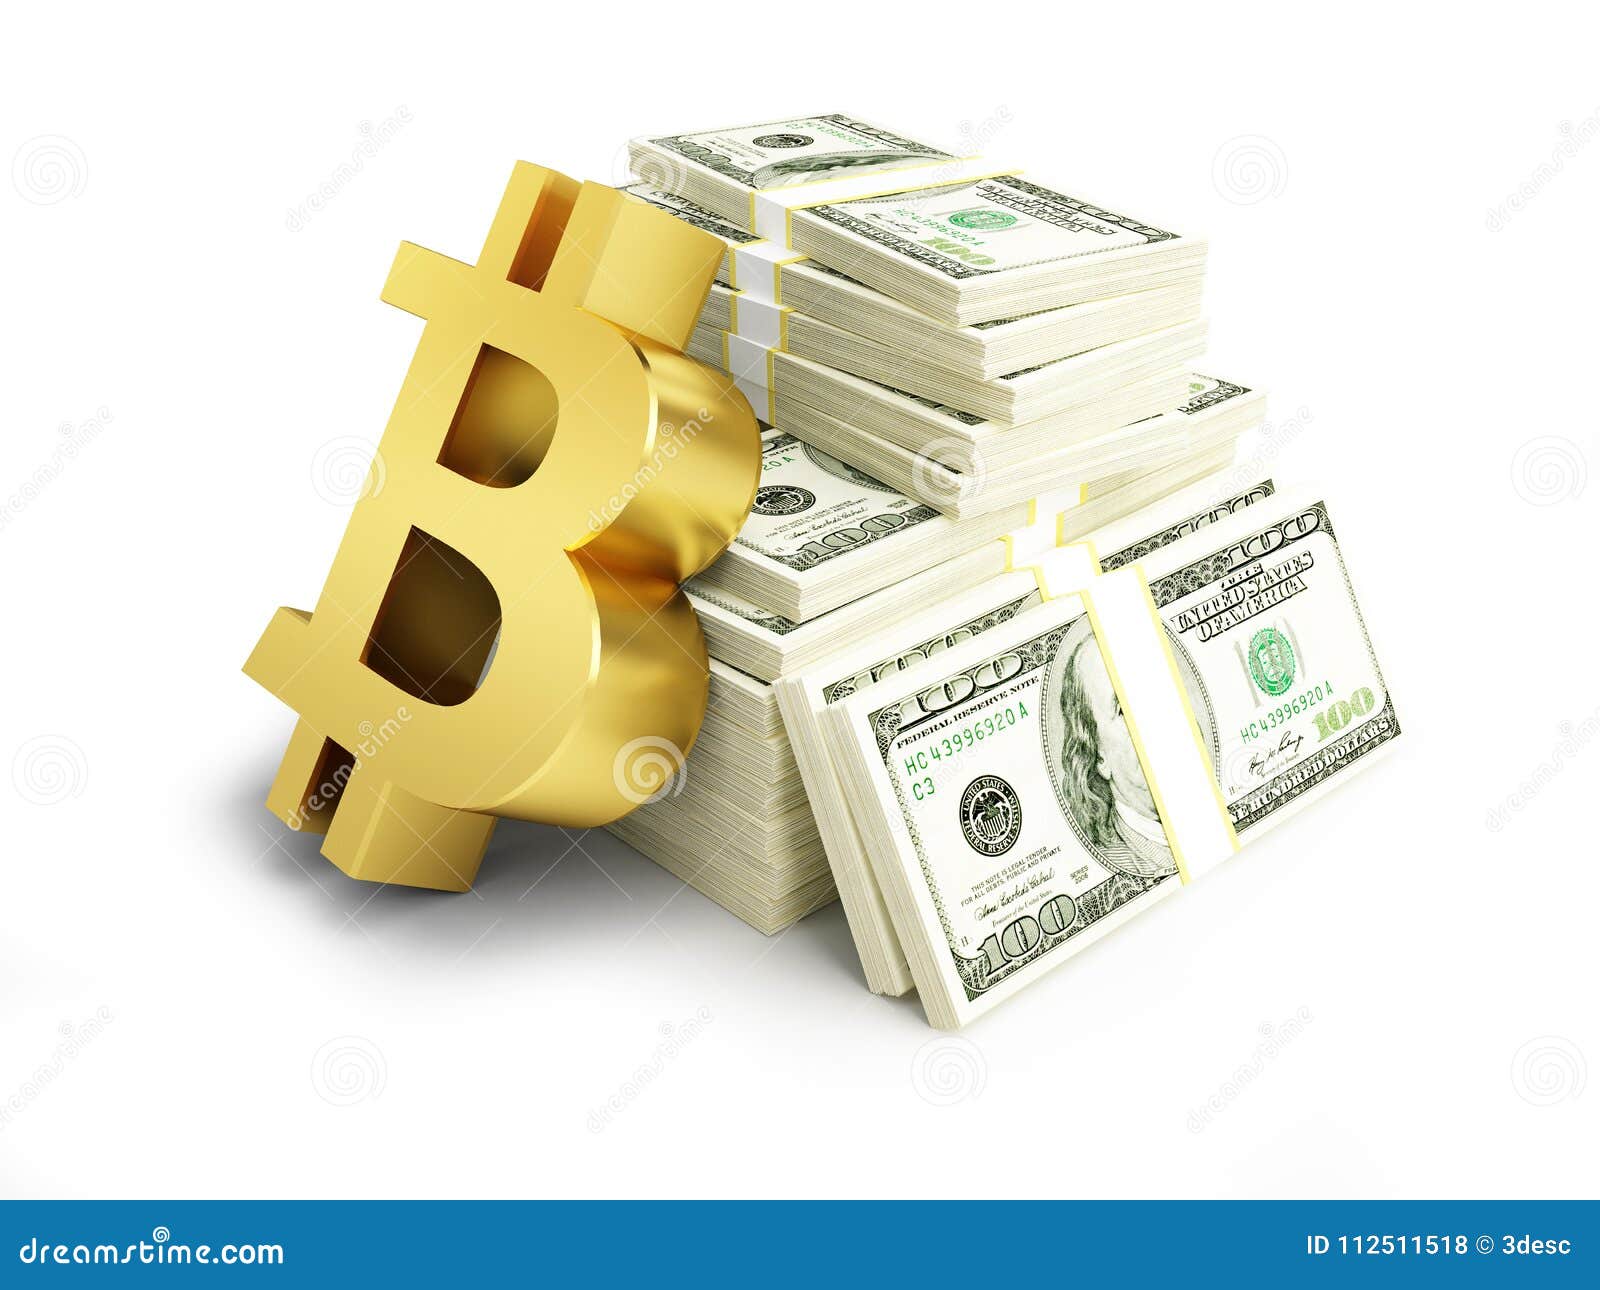 Цена на bitcoin в долларах программа поиск майнеров